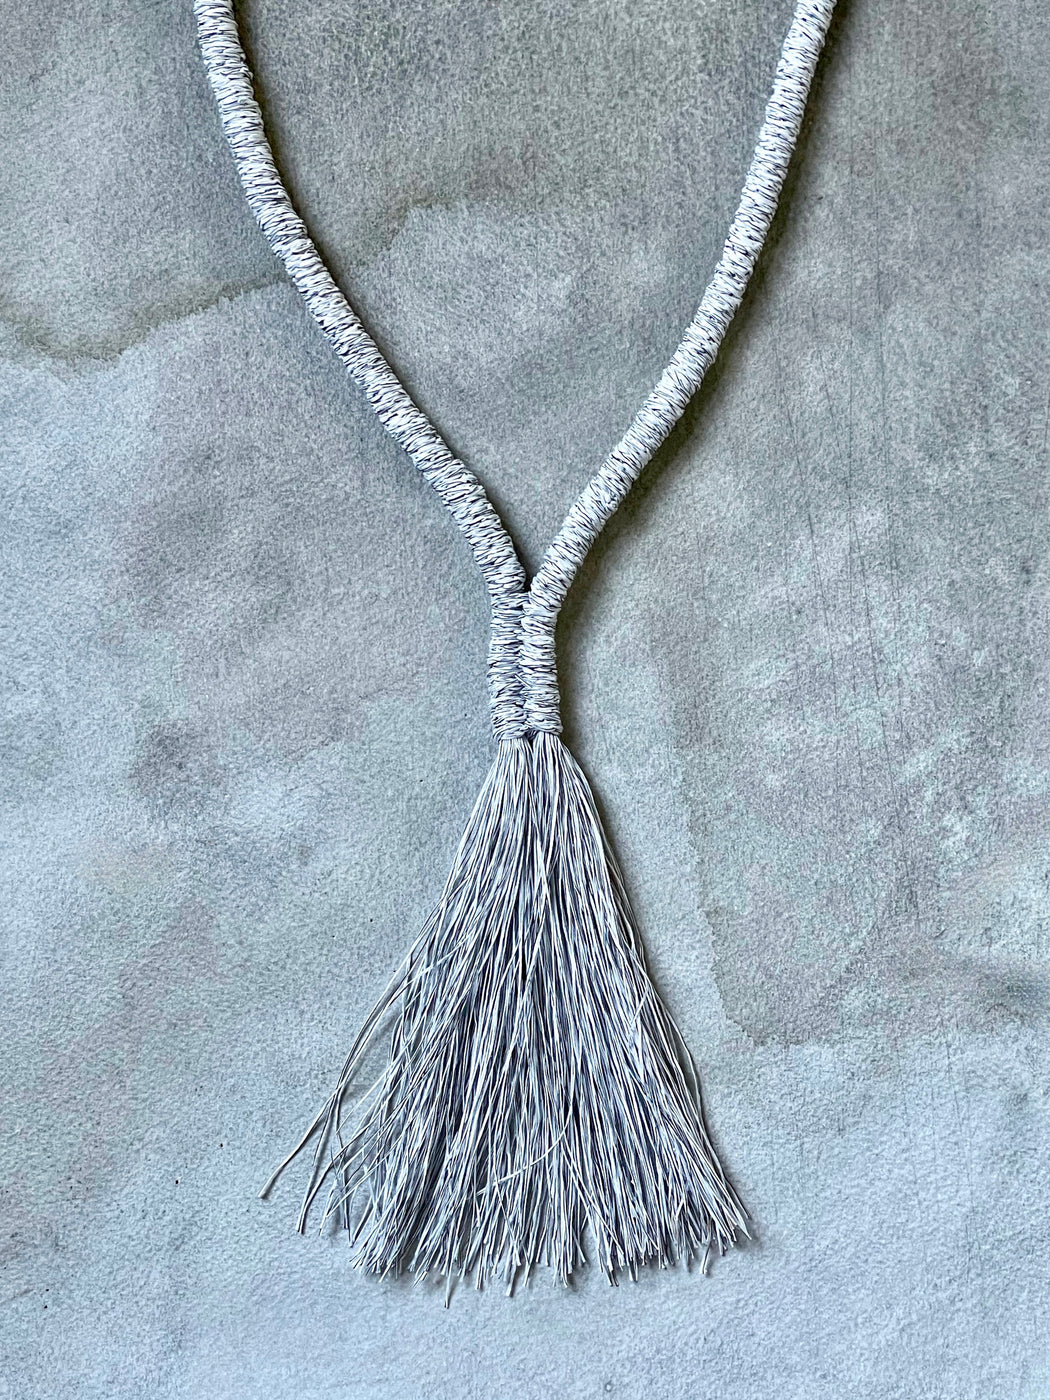 White Tassle Necklace by Kathleen Whitney